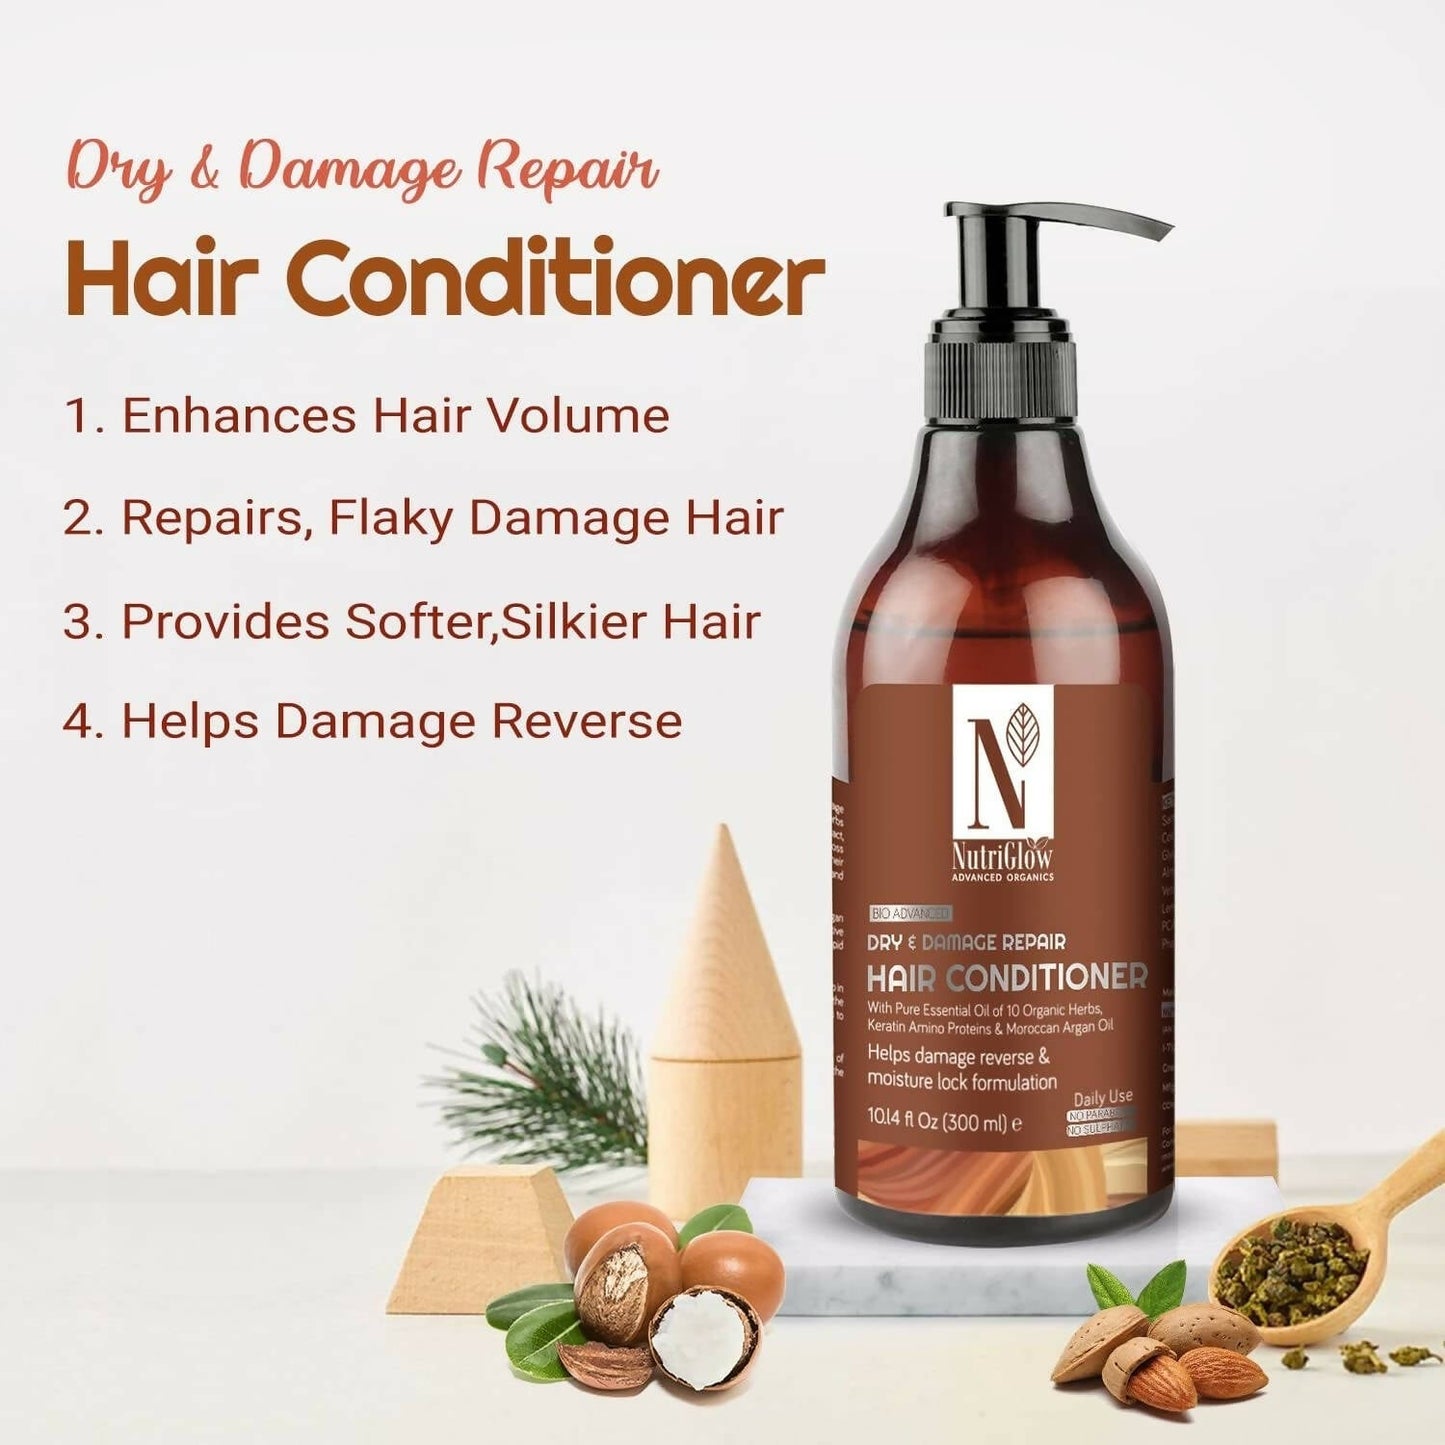 NutriGlow Advanced Organics Bio Advanced Daily Use Dry and Damage Repair Hair Conditioner